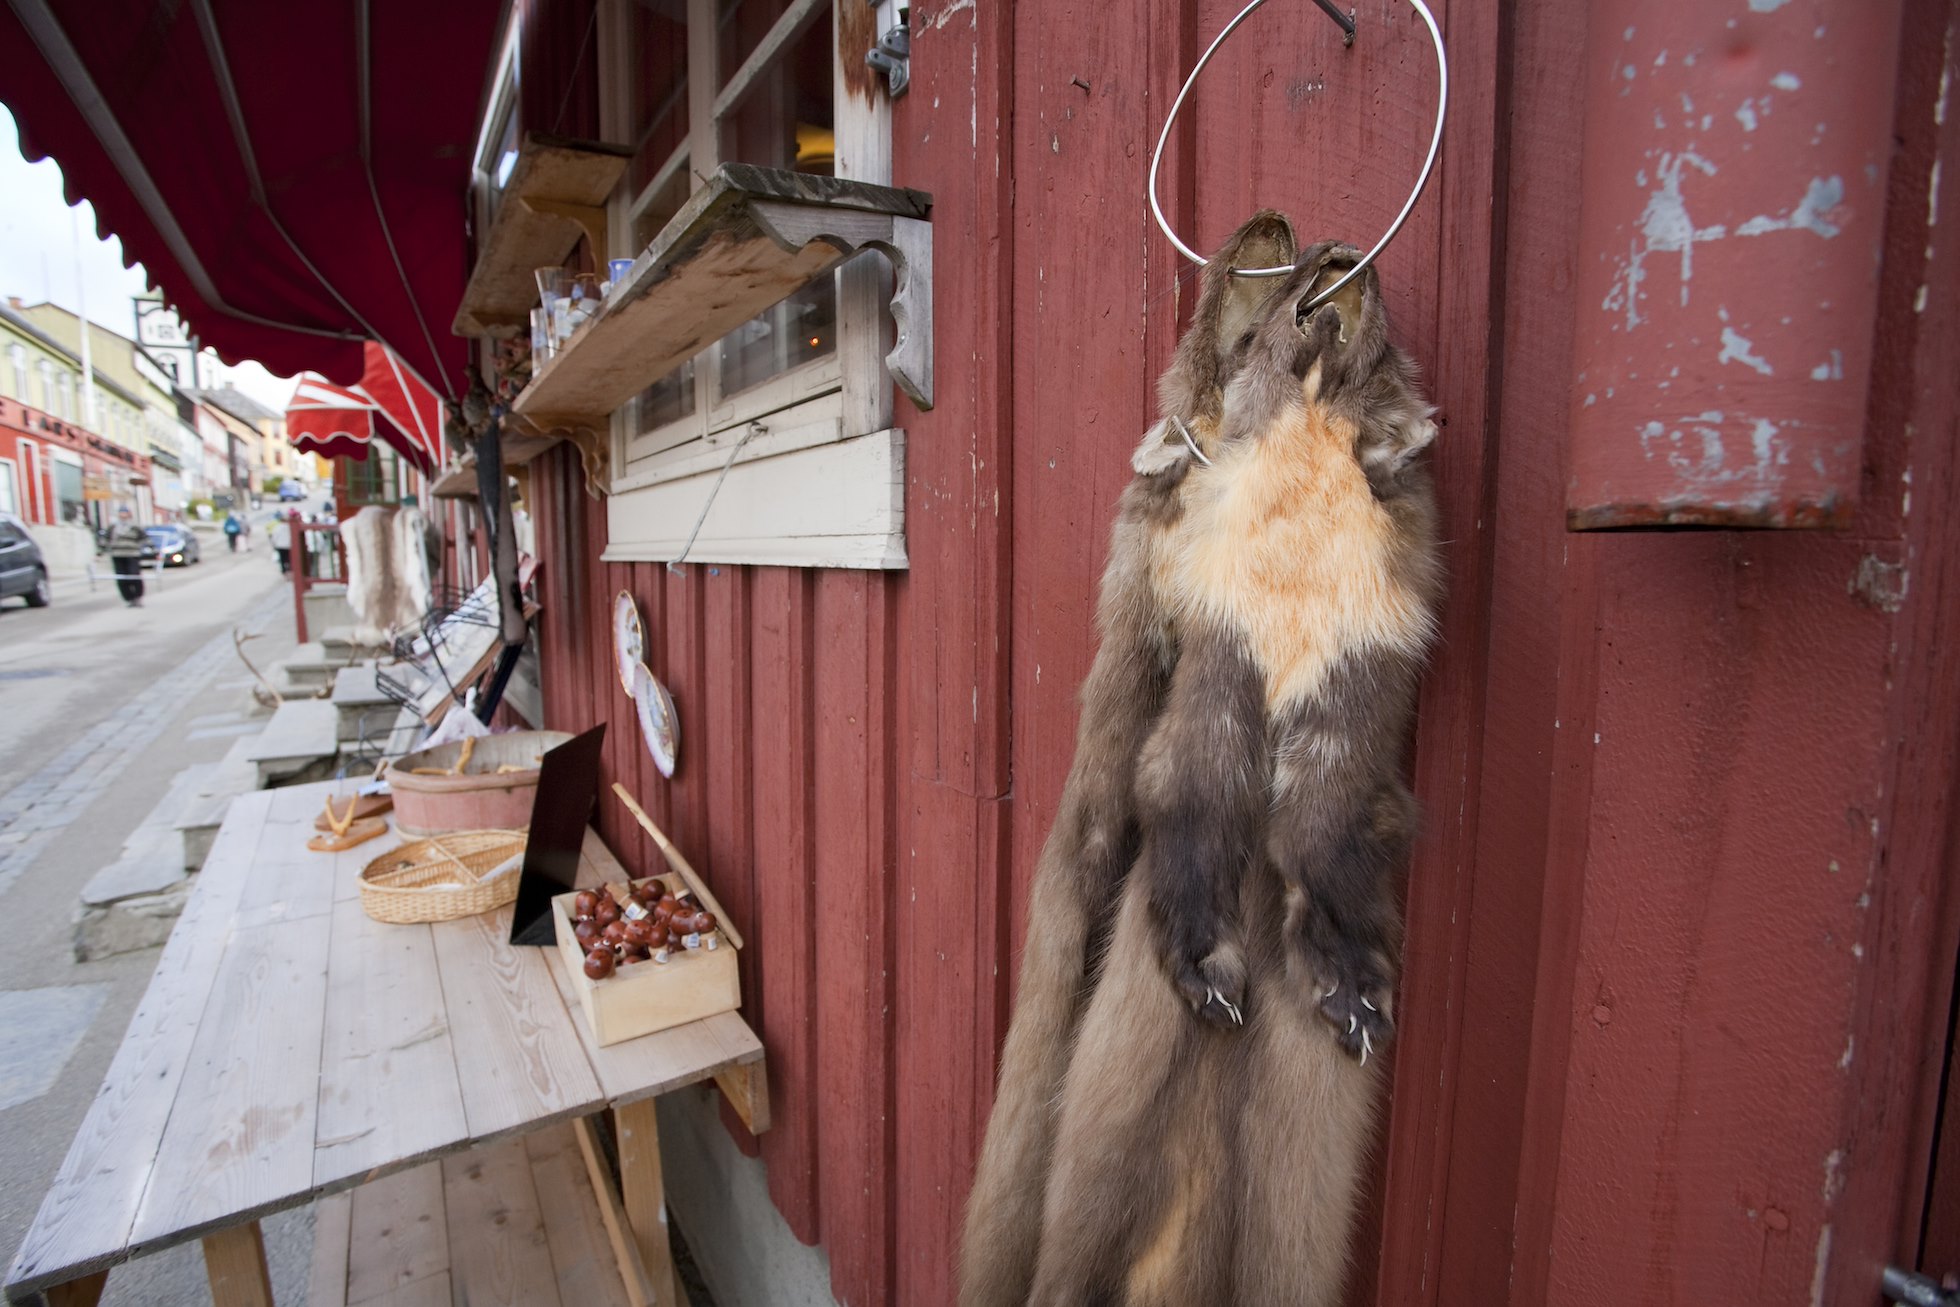 Pine marten (martes martes) furs for sale in Norwegian village of Roros, Norway.